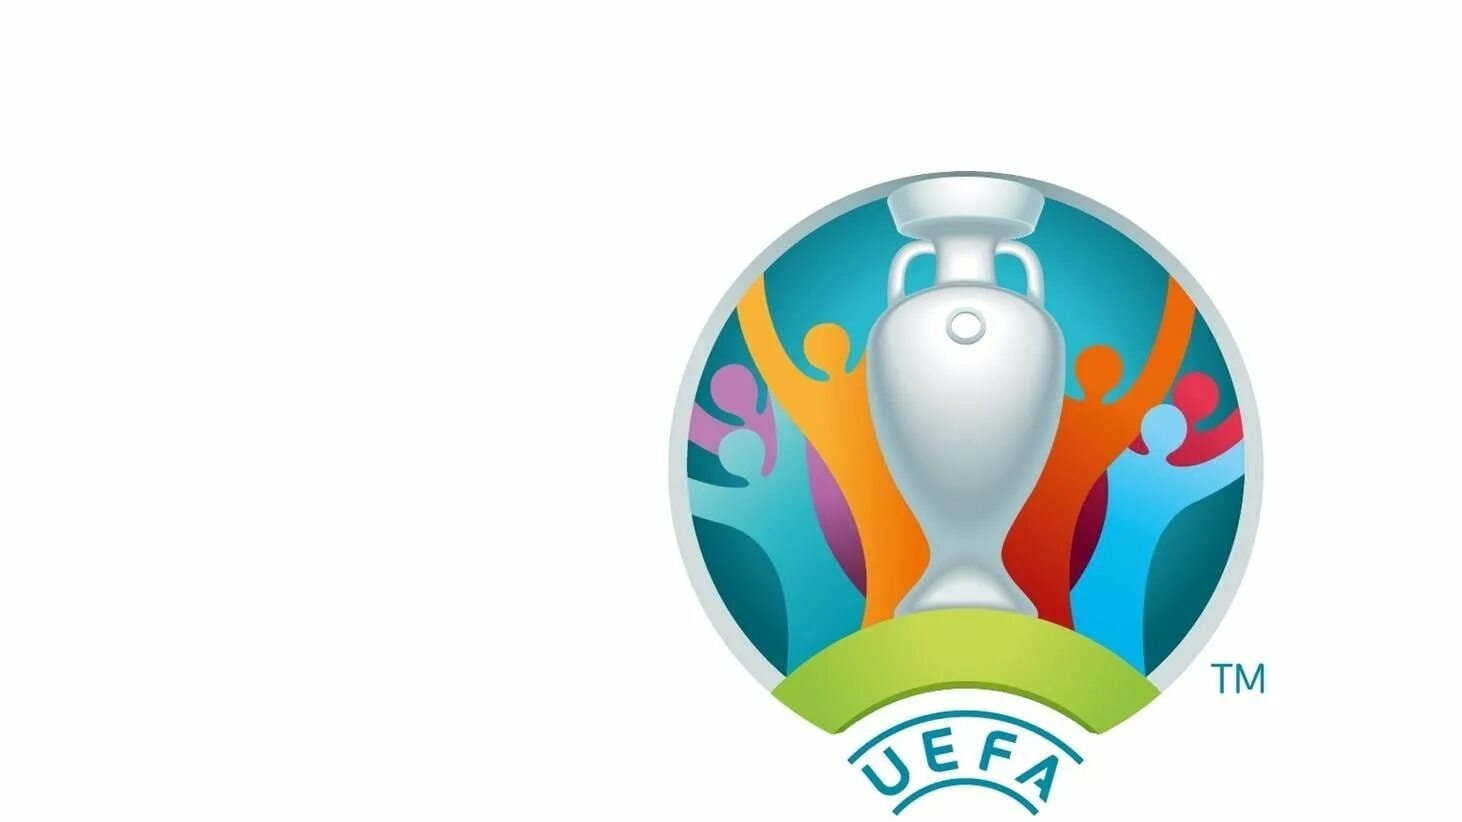 Euro fifa. UEFA Euro 2020 логотип. УЕФА евро 2020 лого. Чемпионат Европы по футболу 2020 эмблема. Чемпионат Европы УЕФА 2020.